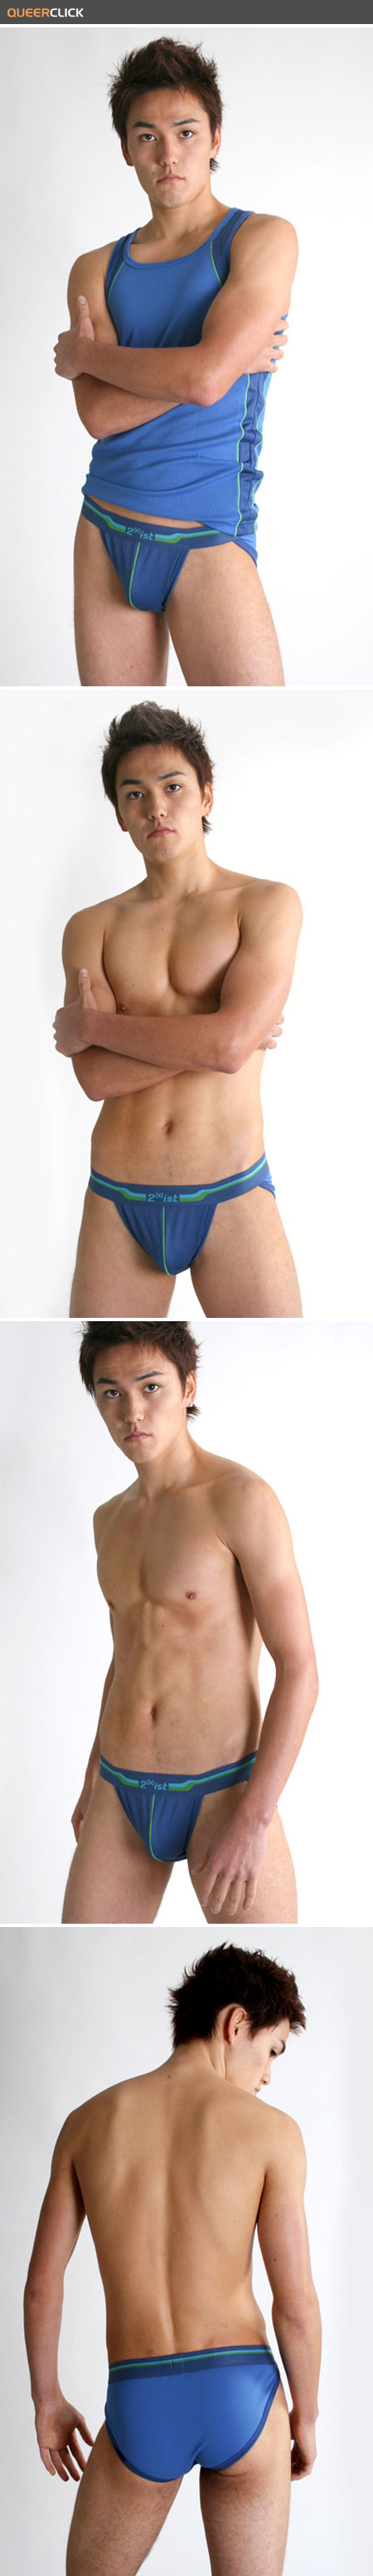 japanese_underwear_model_005_1.jpg